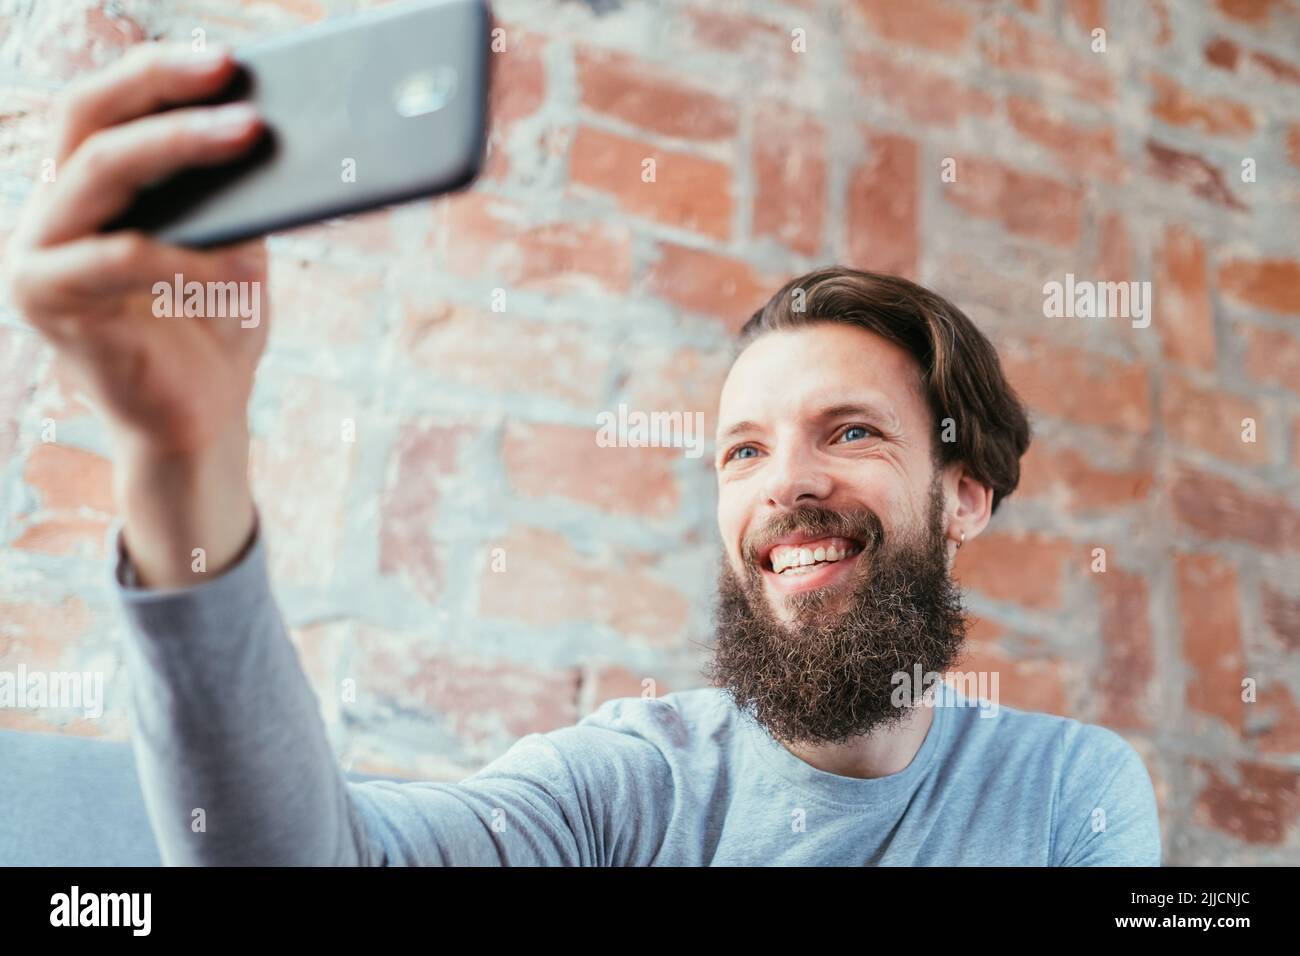 man selfie social trend idle leisure vanity photo Stock Photo